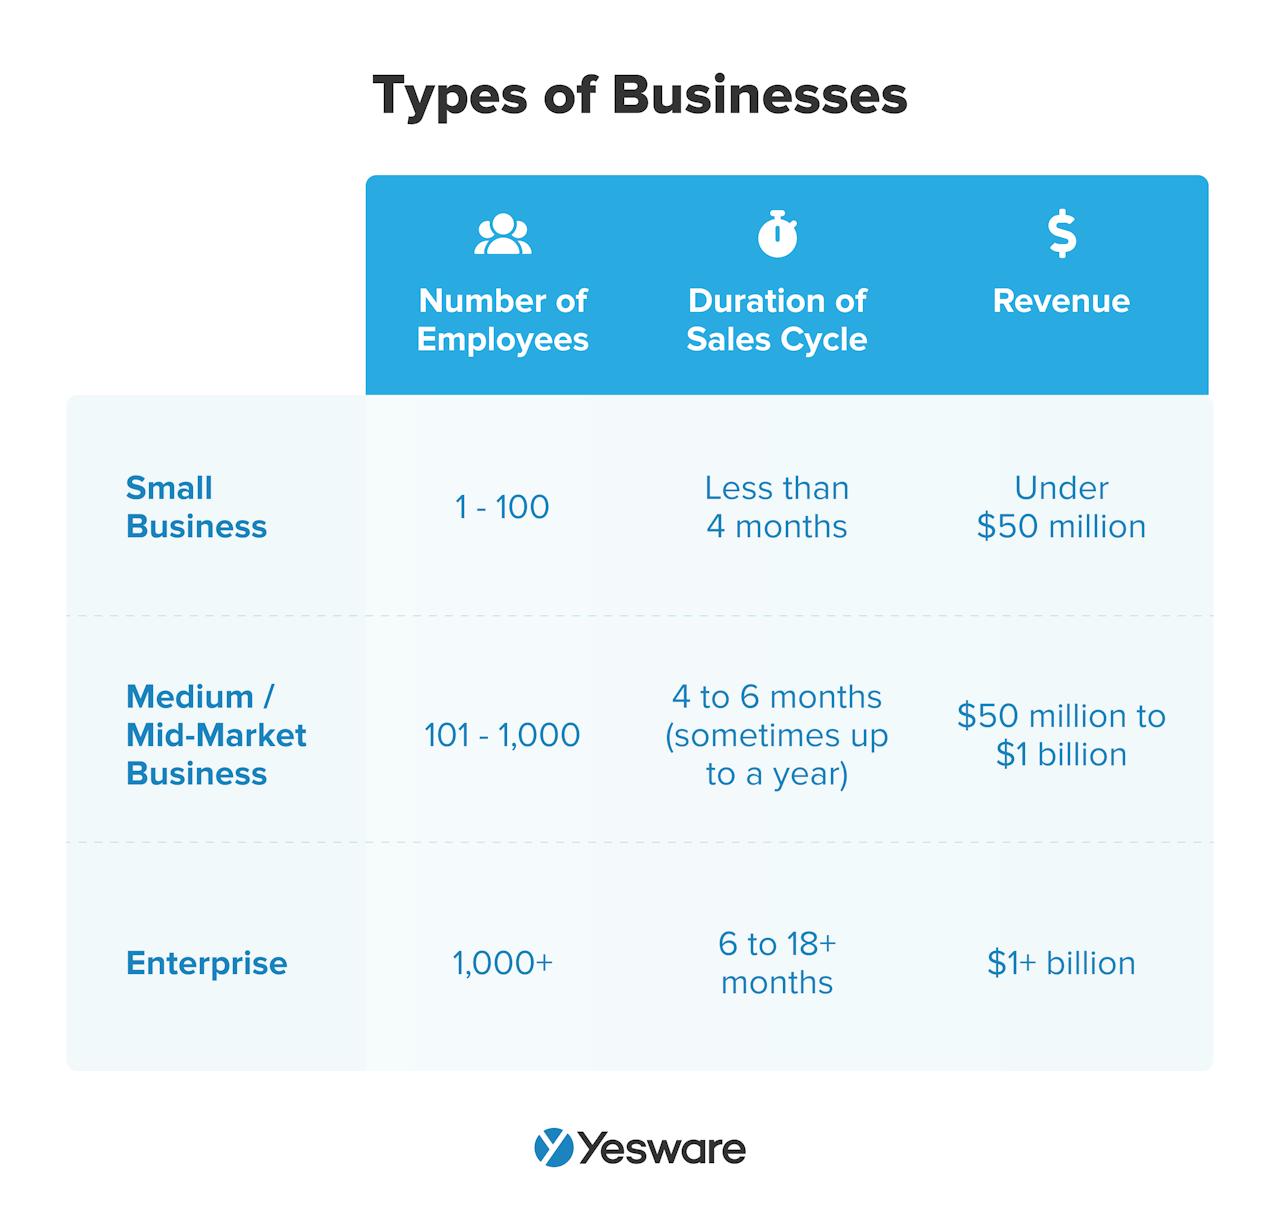 SMB sales: small business vs medium/mid-market business vs enterprise